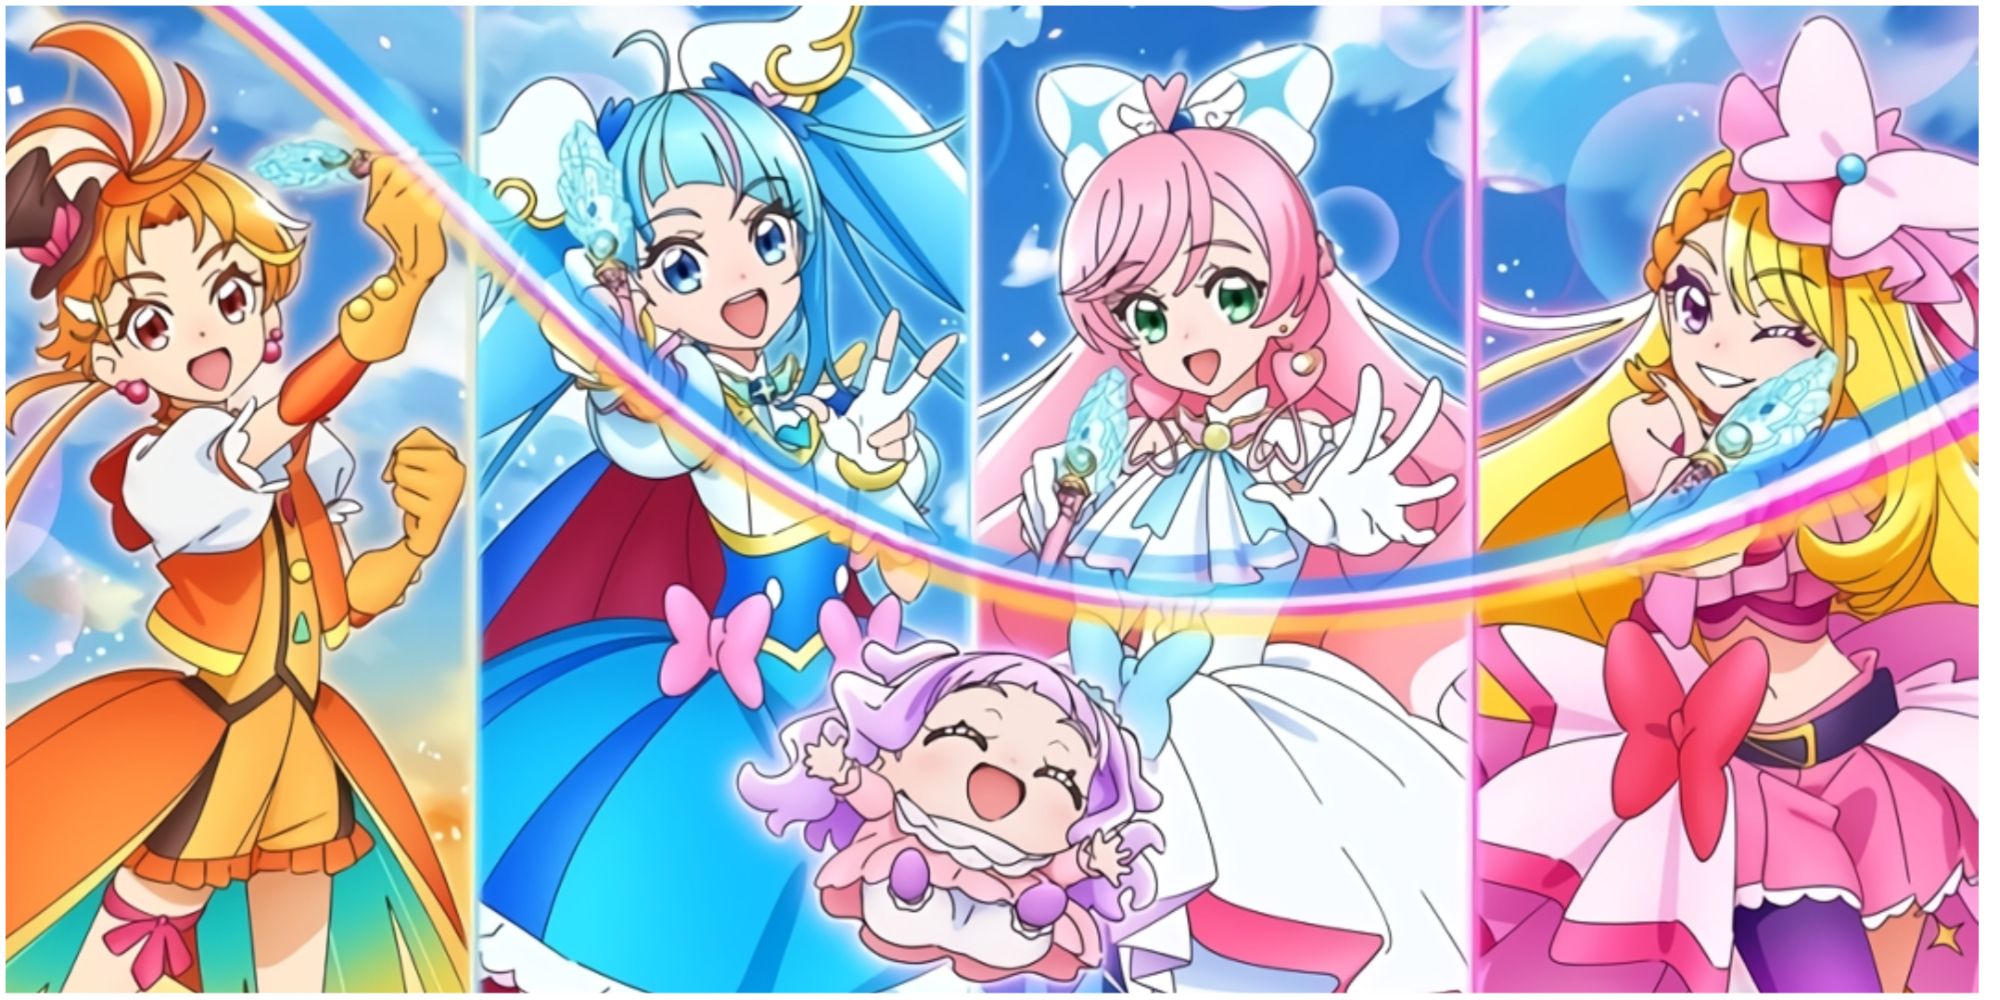 Hirogaru Sky Precure! 2023 Pretty Cure Logo Revealed! ☁️ 